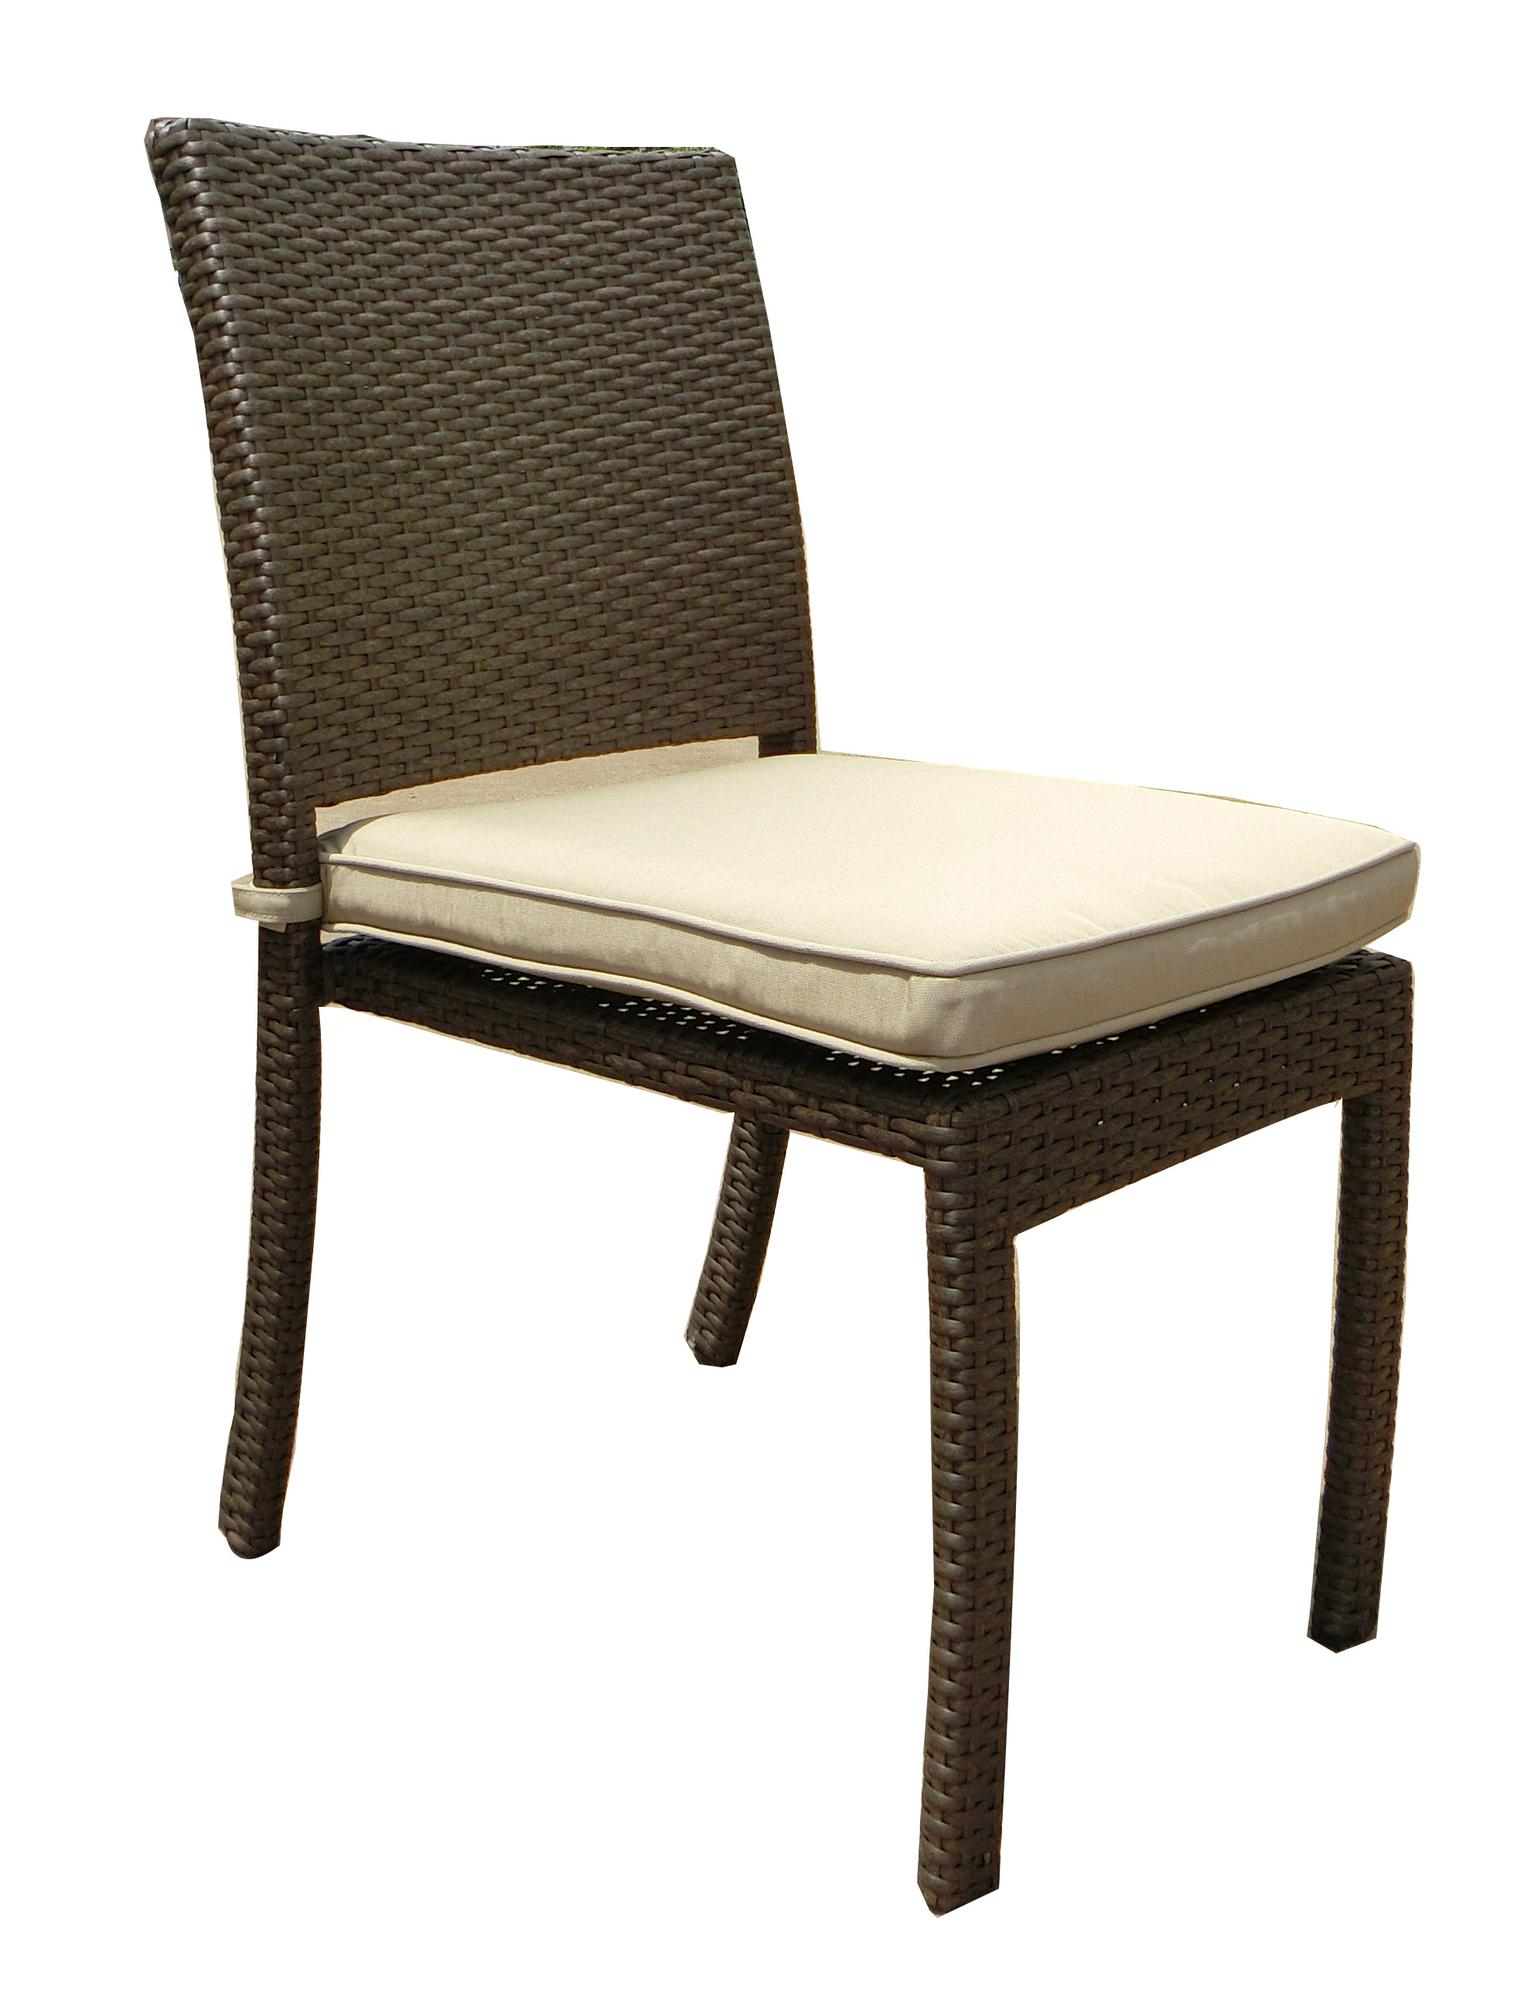 Sb-3775-16 South Beach Wicker Patio Armless Dining Chair